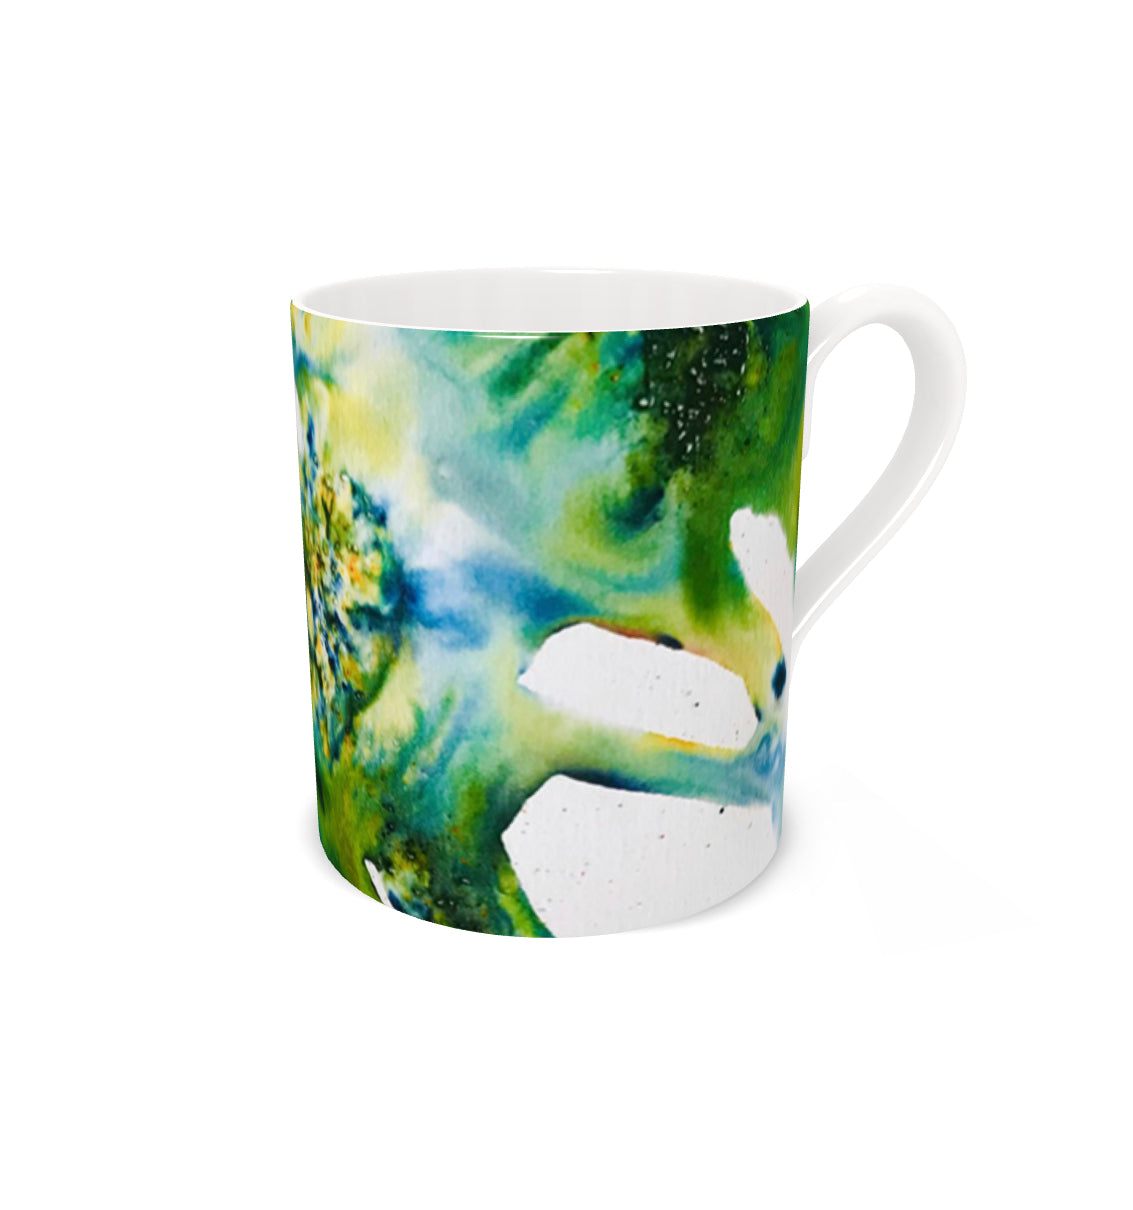 Green orbit mug